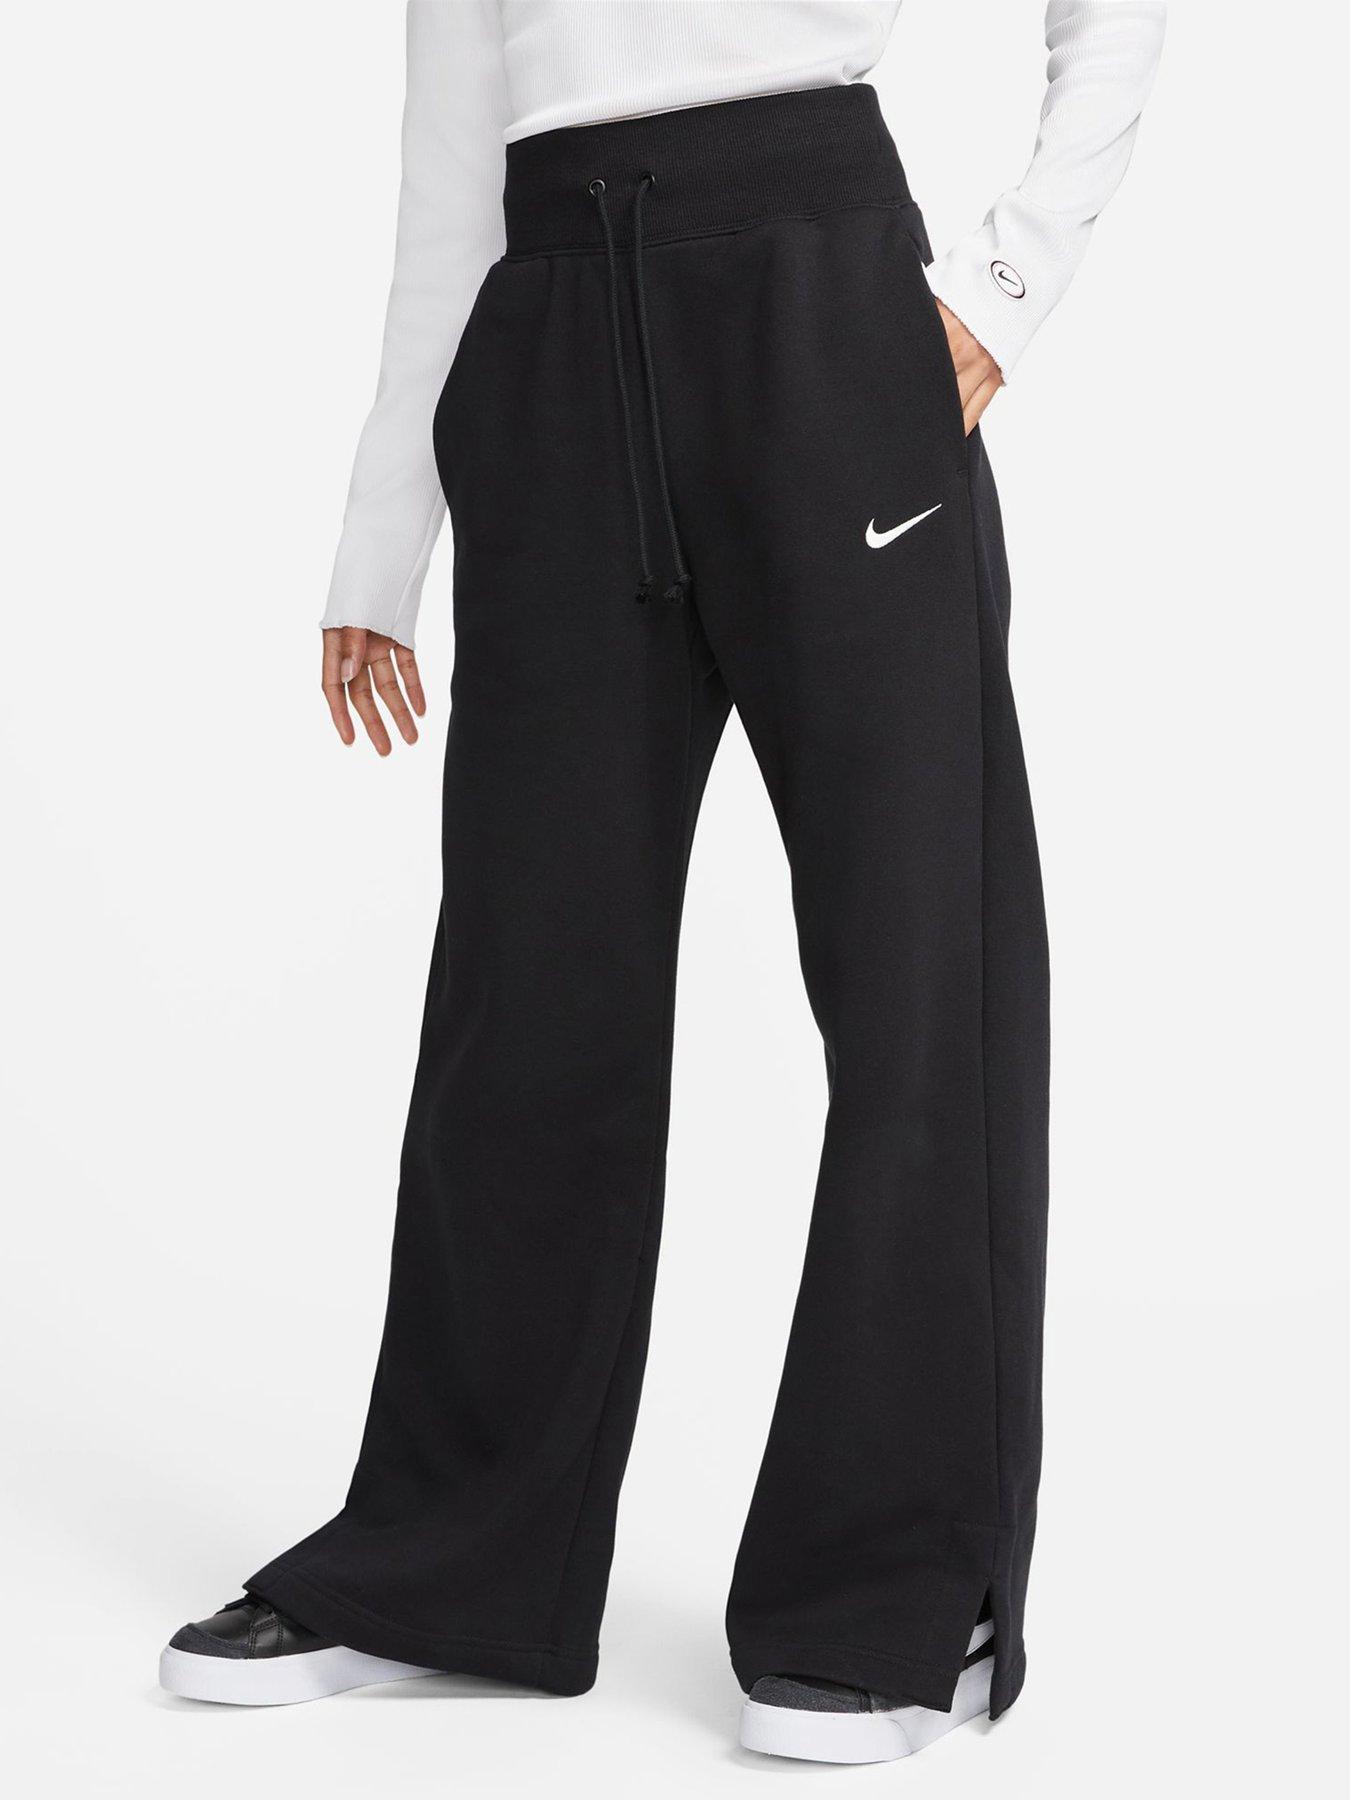 Nike Fit Dry Womens Straight Leg Sweatpants Black Stretch Drawstring M 8-10